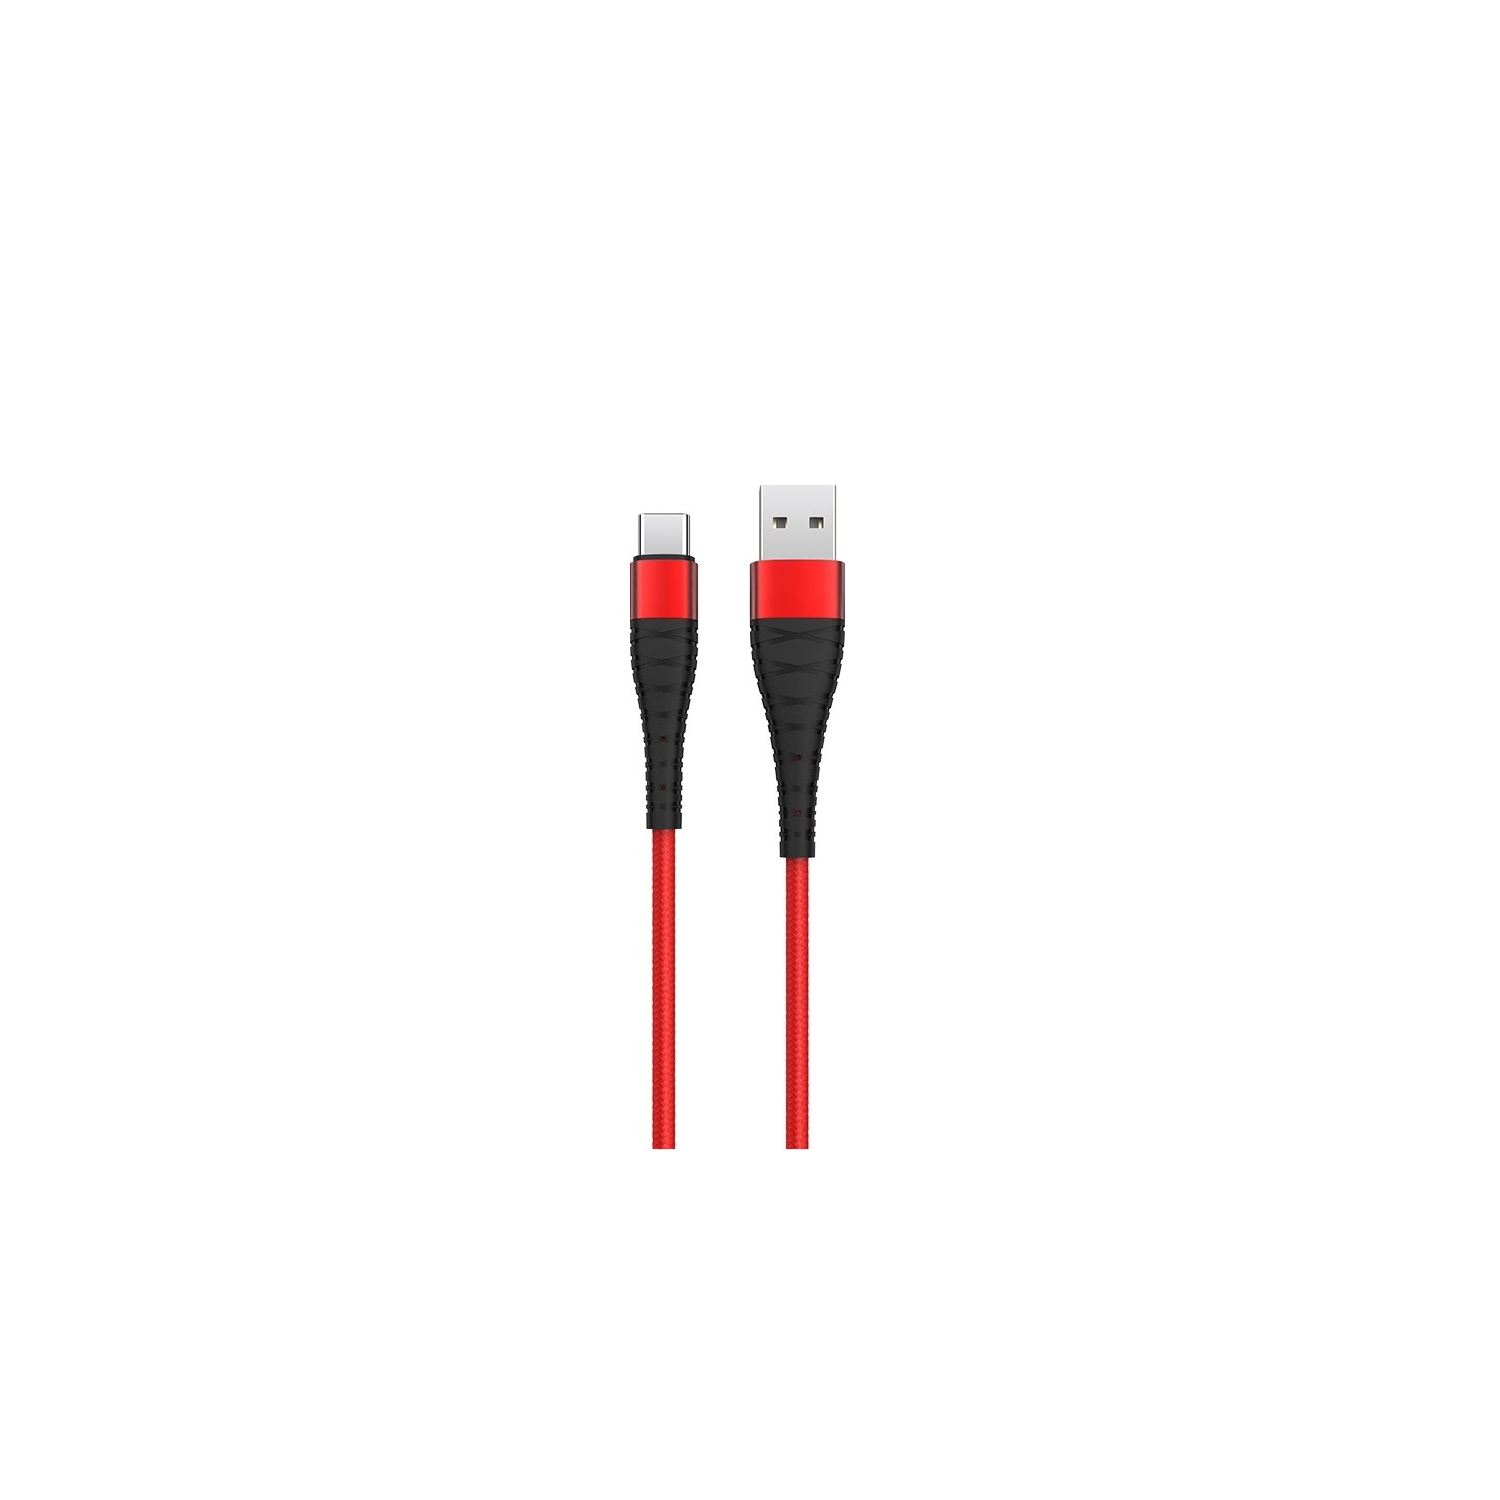 【1.0M/3.3Ft】 Heavy Duty Nylon Braid USB Type C Fast Charging Data Cable Cord for Samsung Google LG Motorola Phones, Red